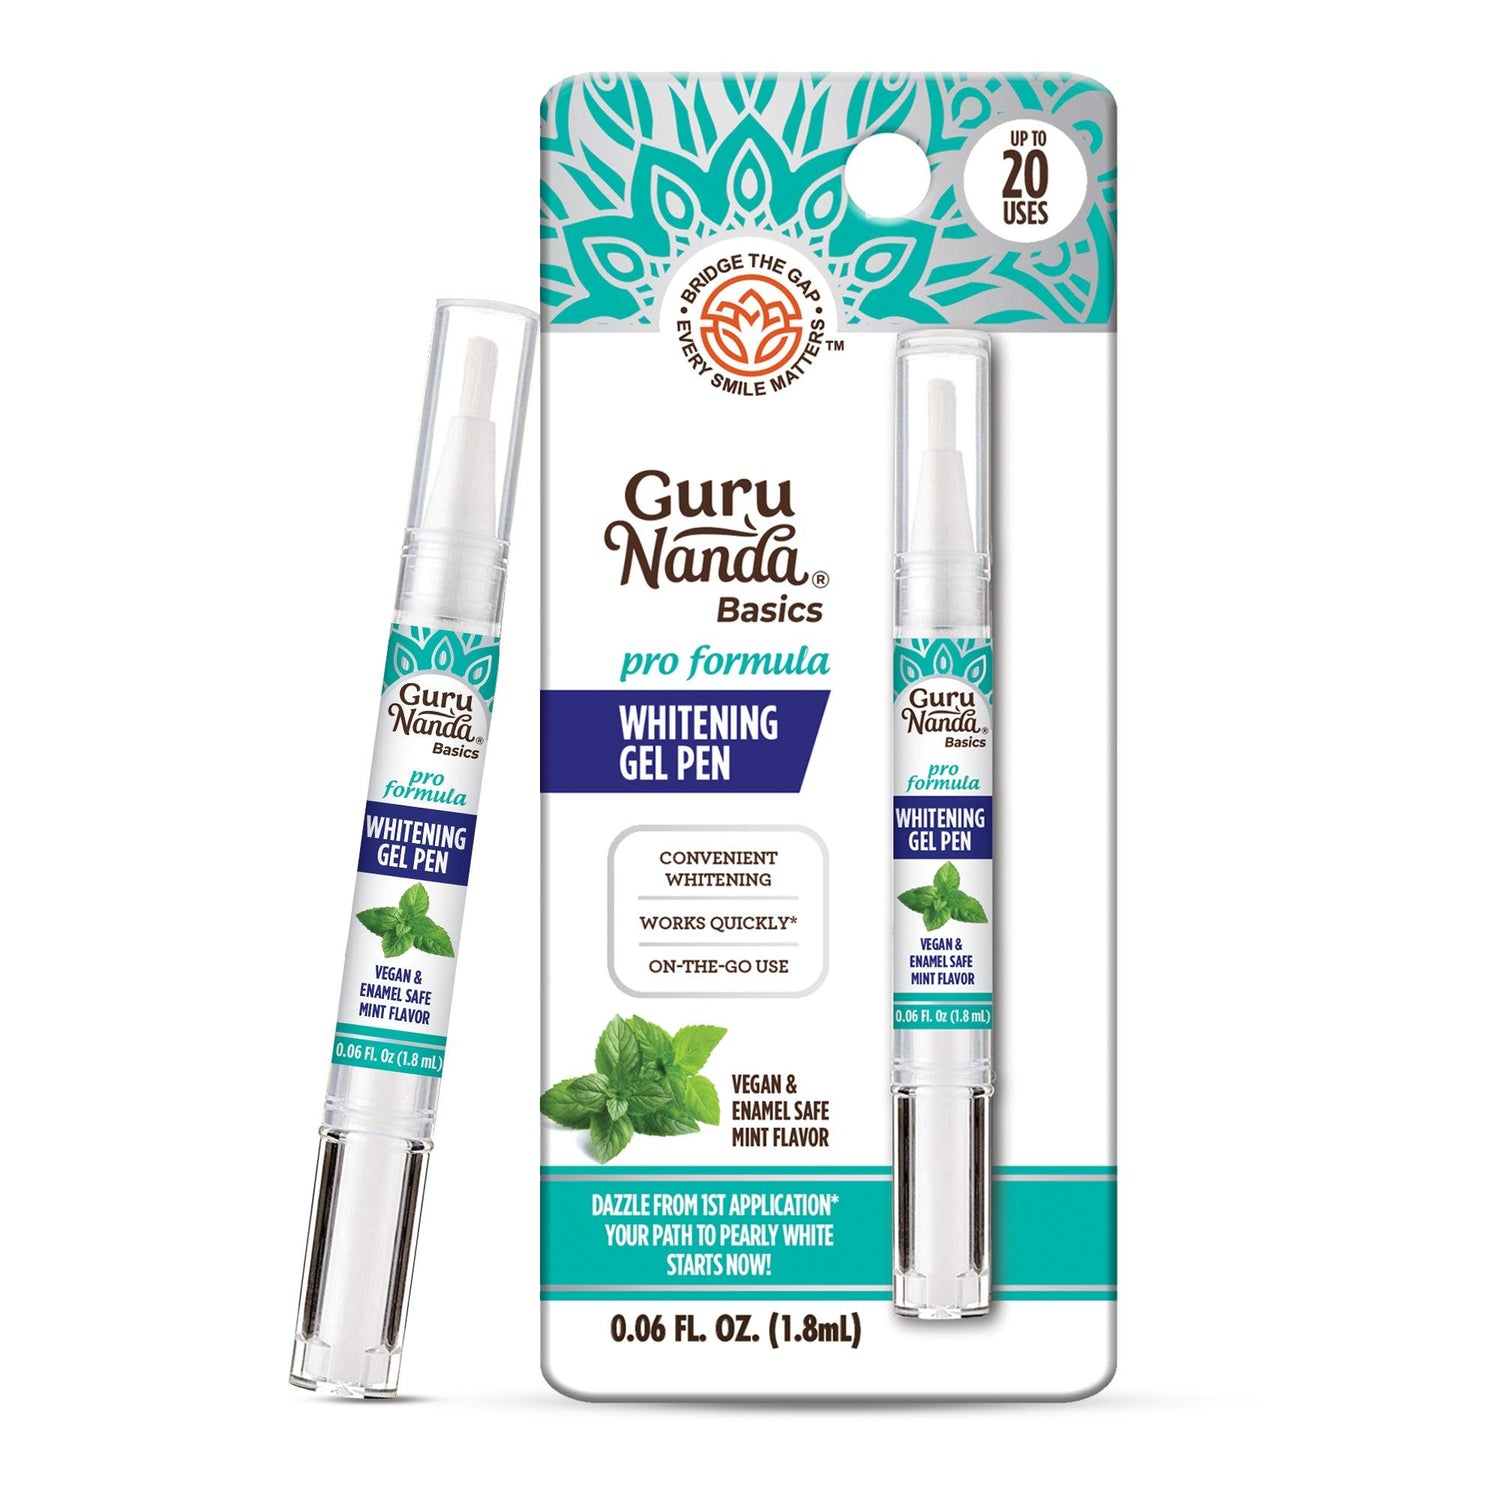 Pro Formula Whitening Gel Pen 1.8mL - GuruNanda